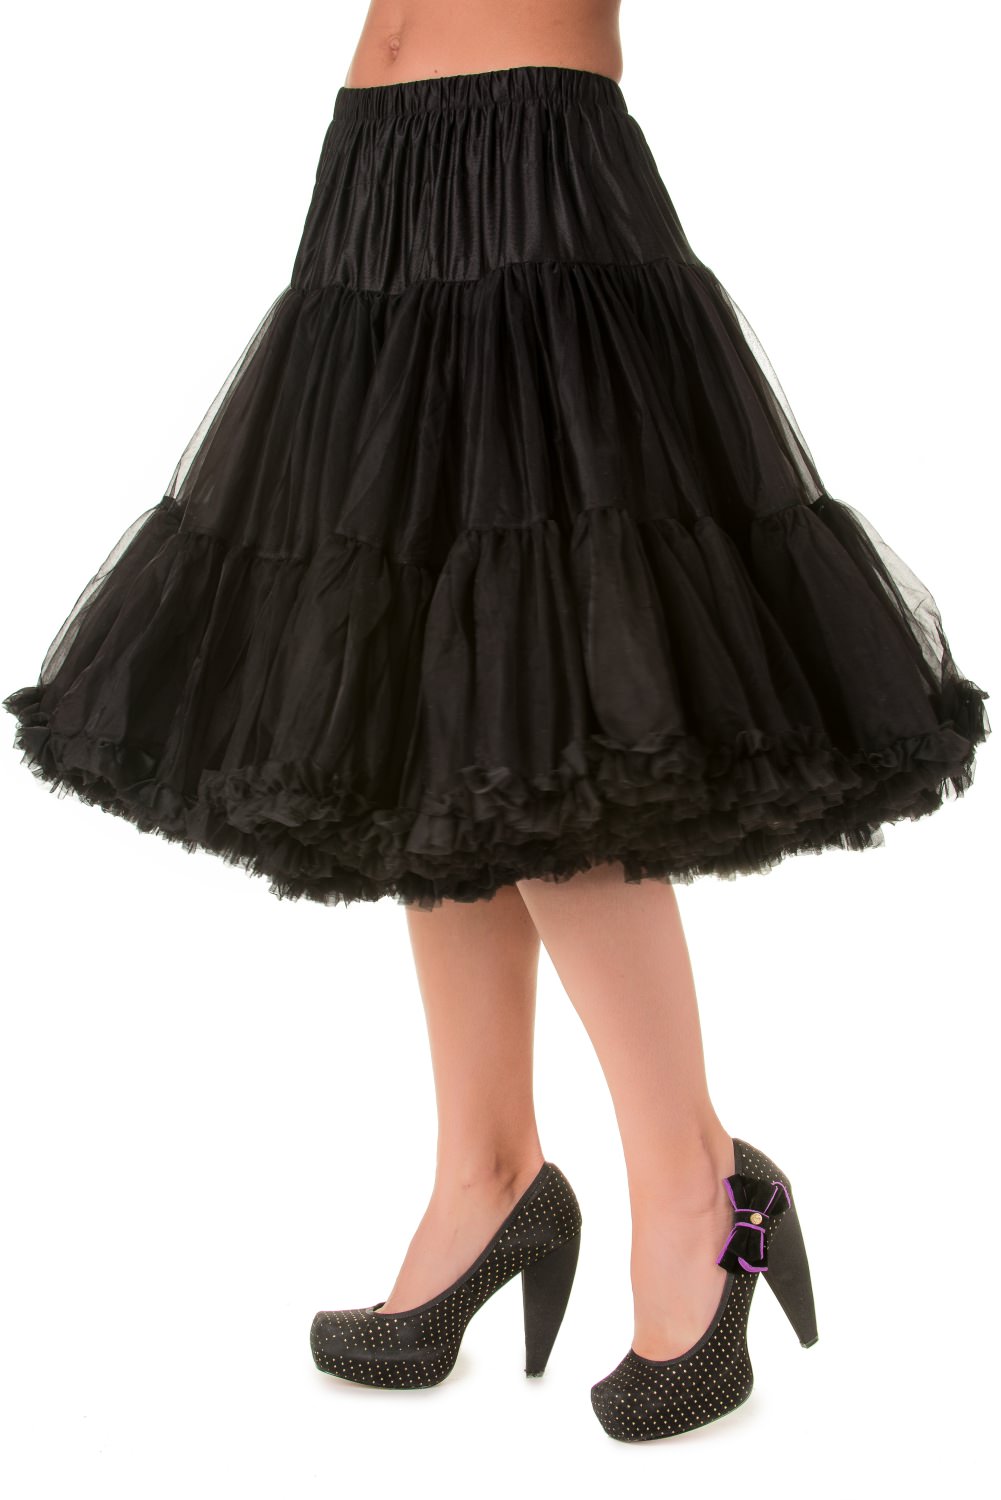 Banned Retro 50s Lizzy Lifeforms Black Petticoat